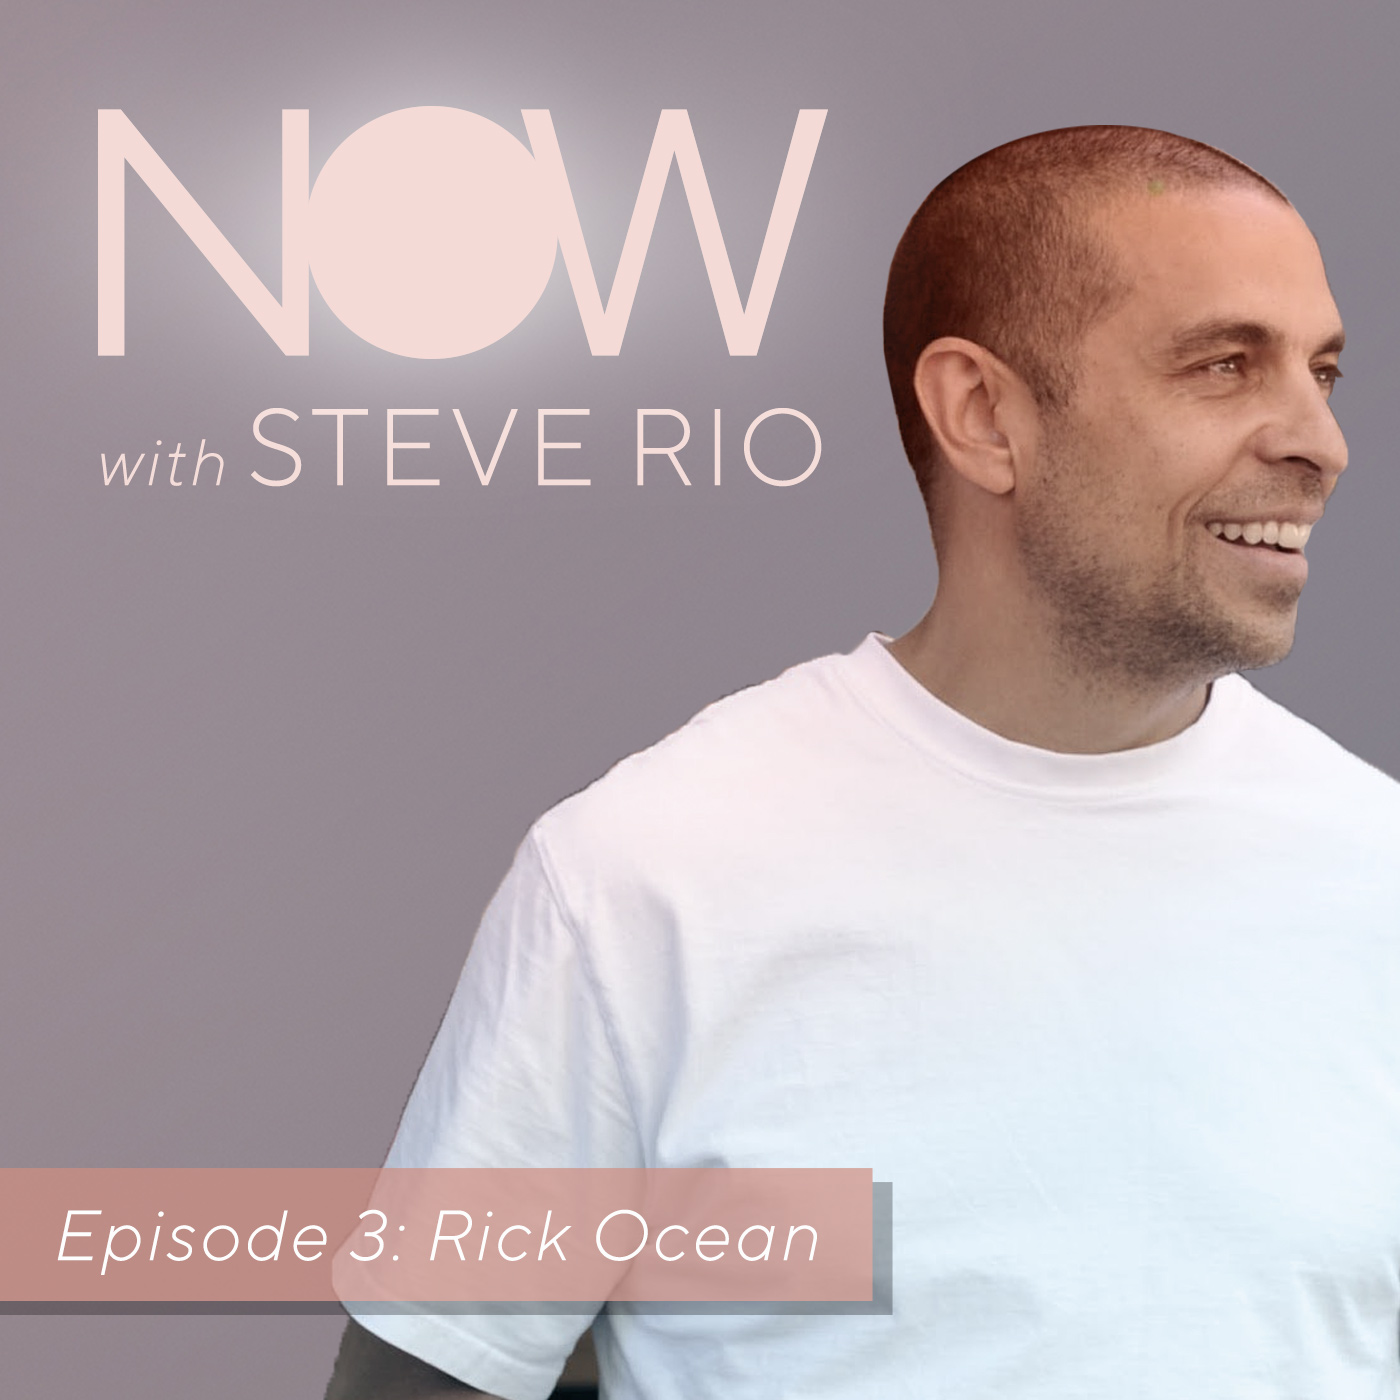 Rick Ocean on NOW with Steve Rio